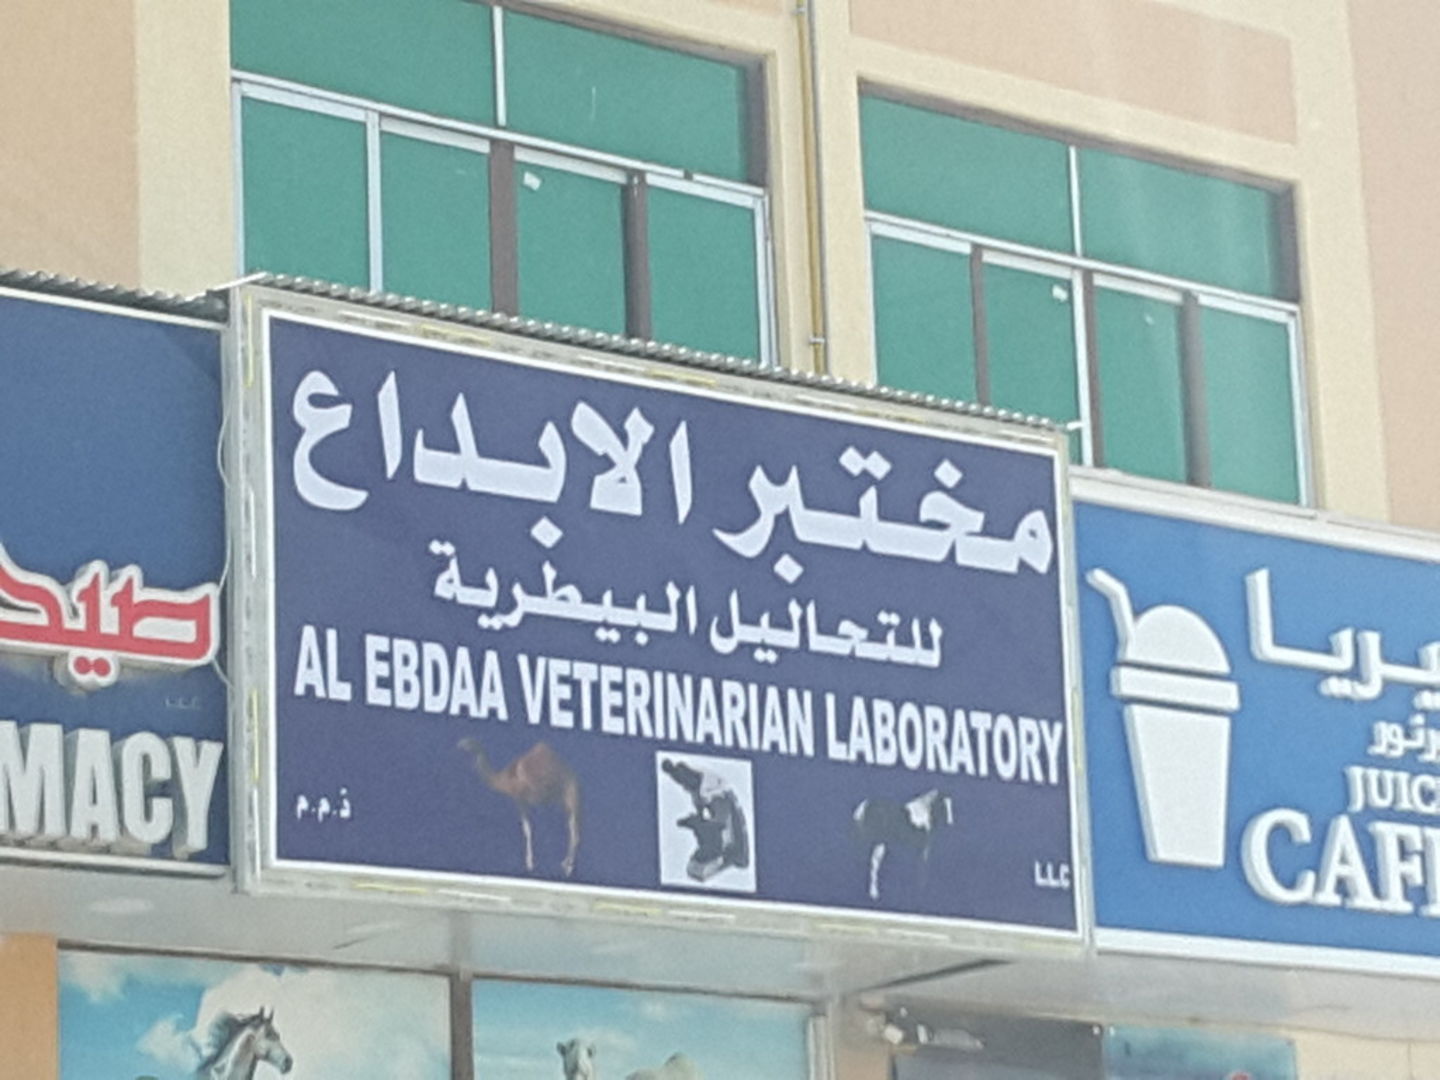 Al Ebdaa Veterinary Laboratory